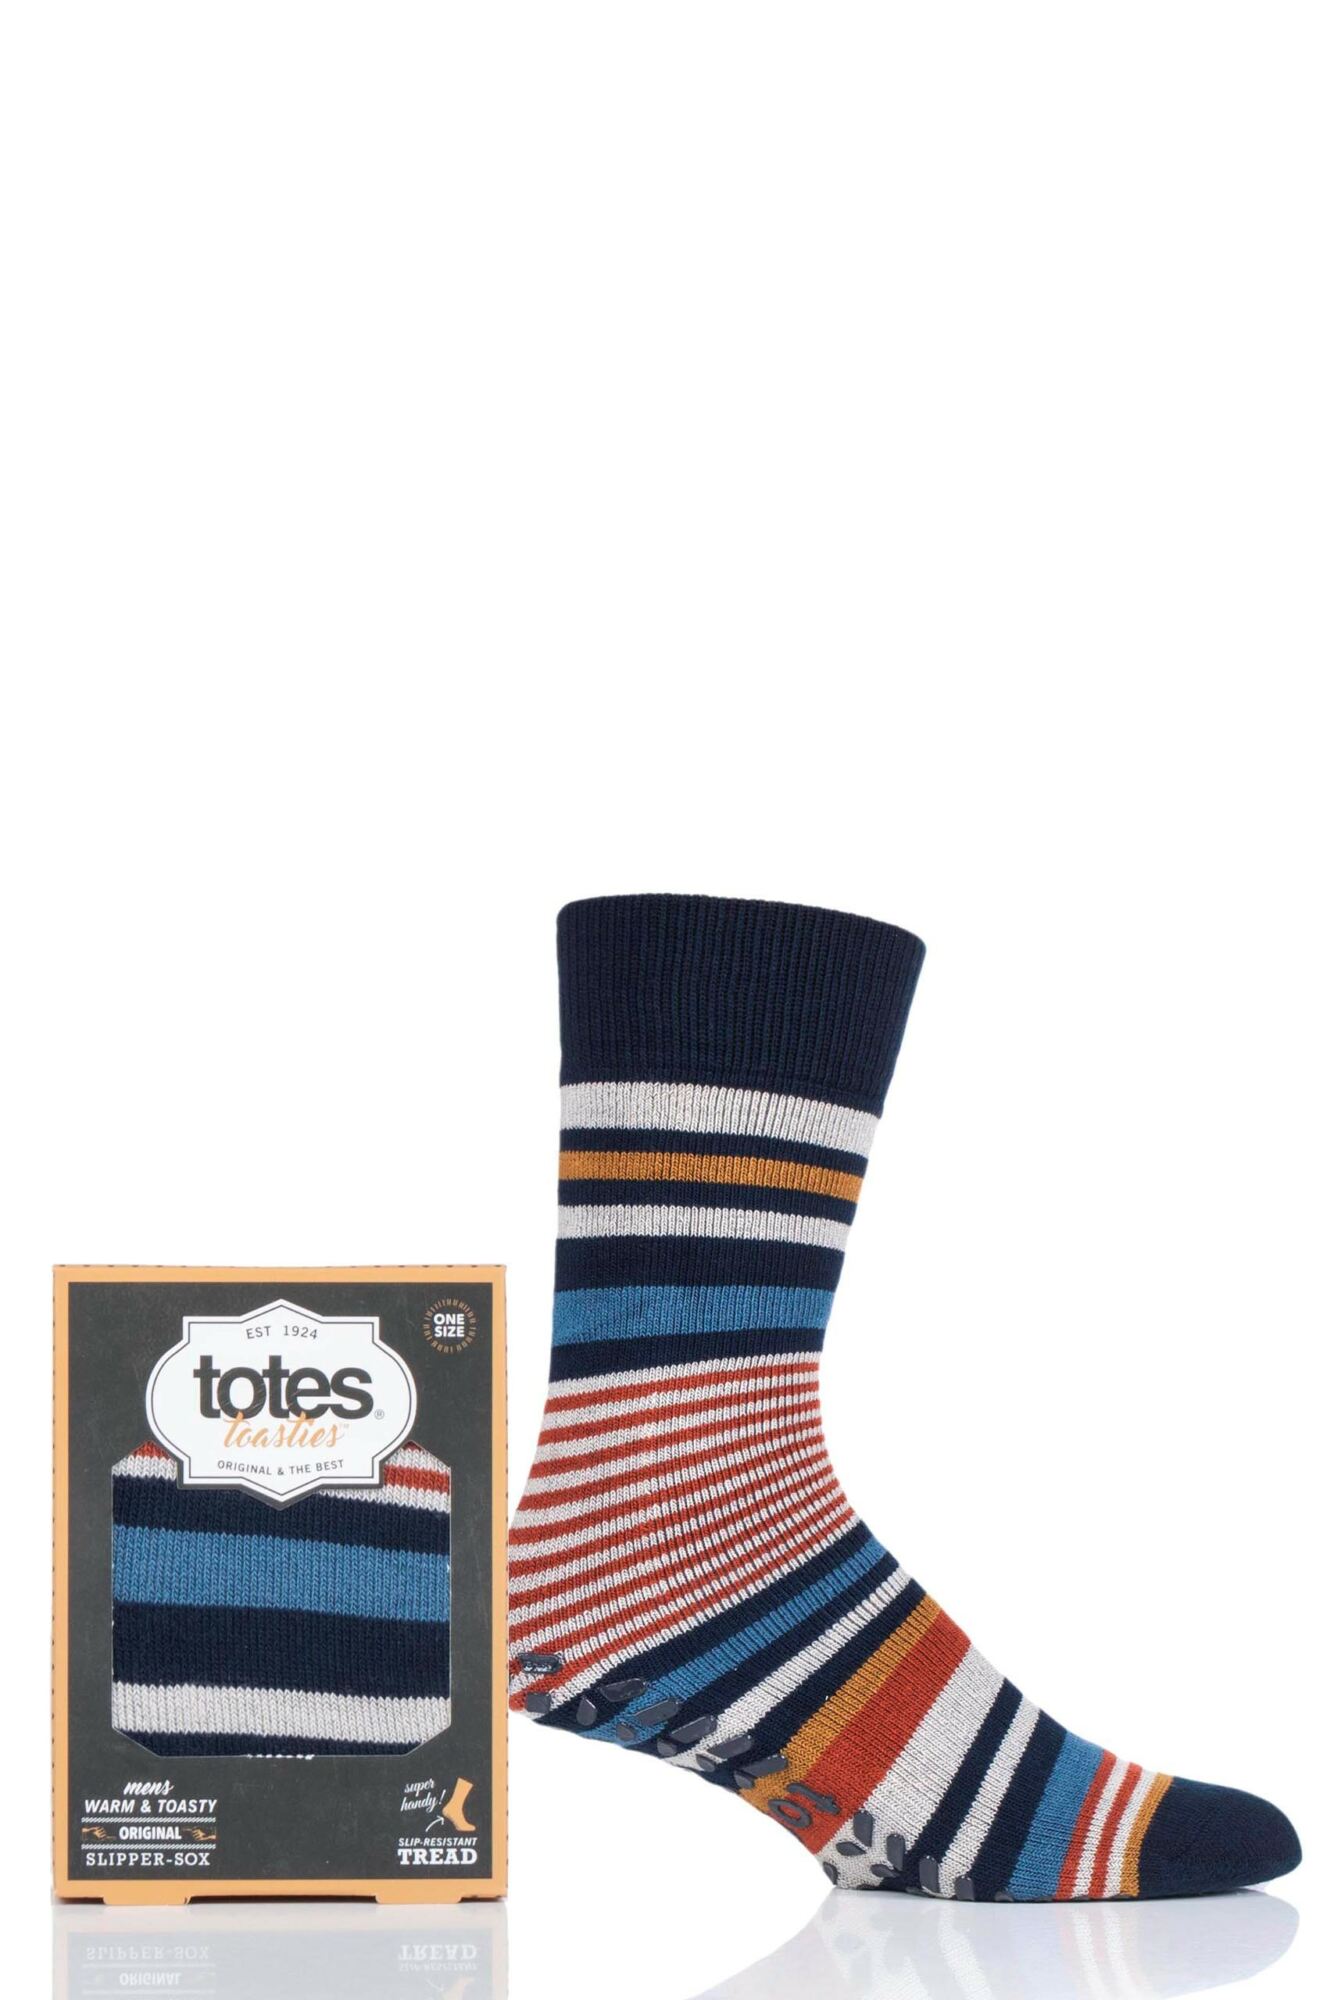 1 Pair Originals Slipper Socks Men's - Totes